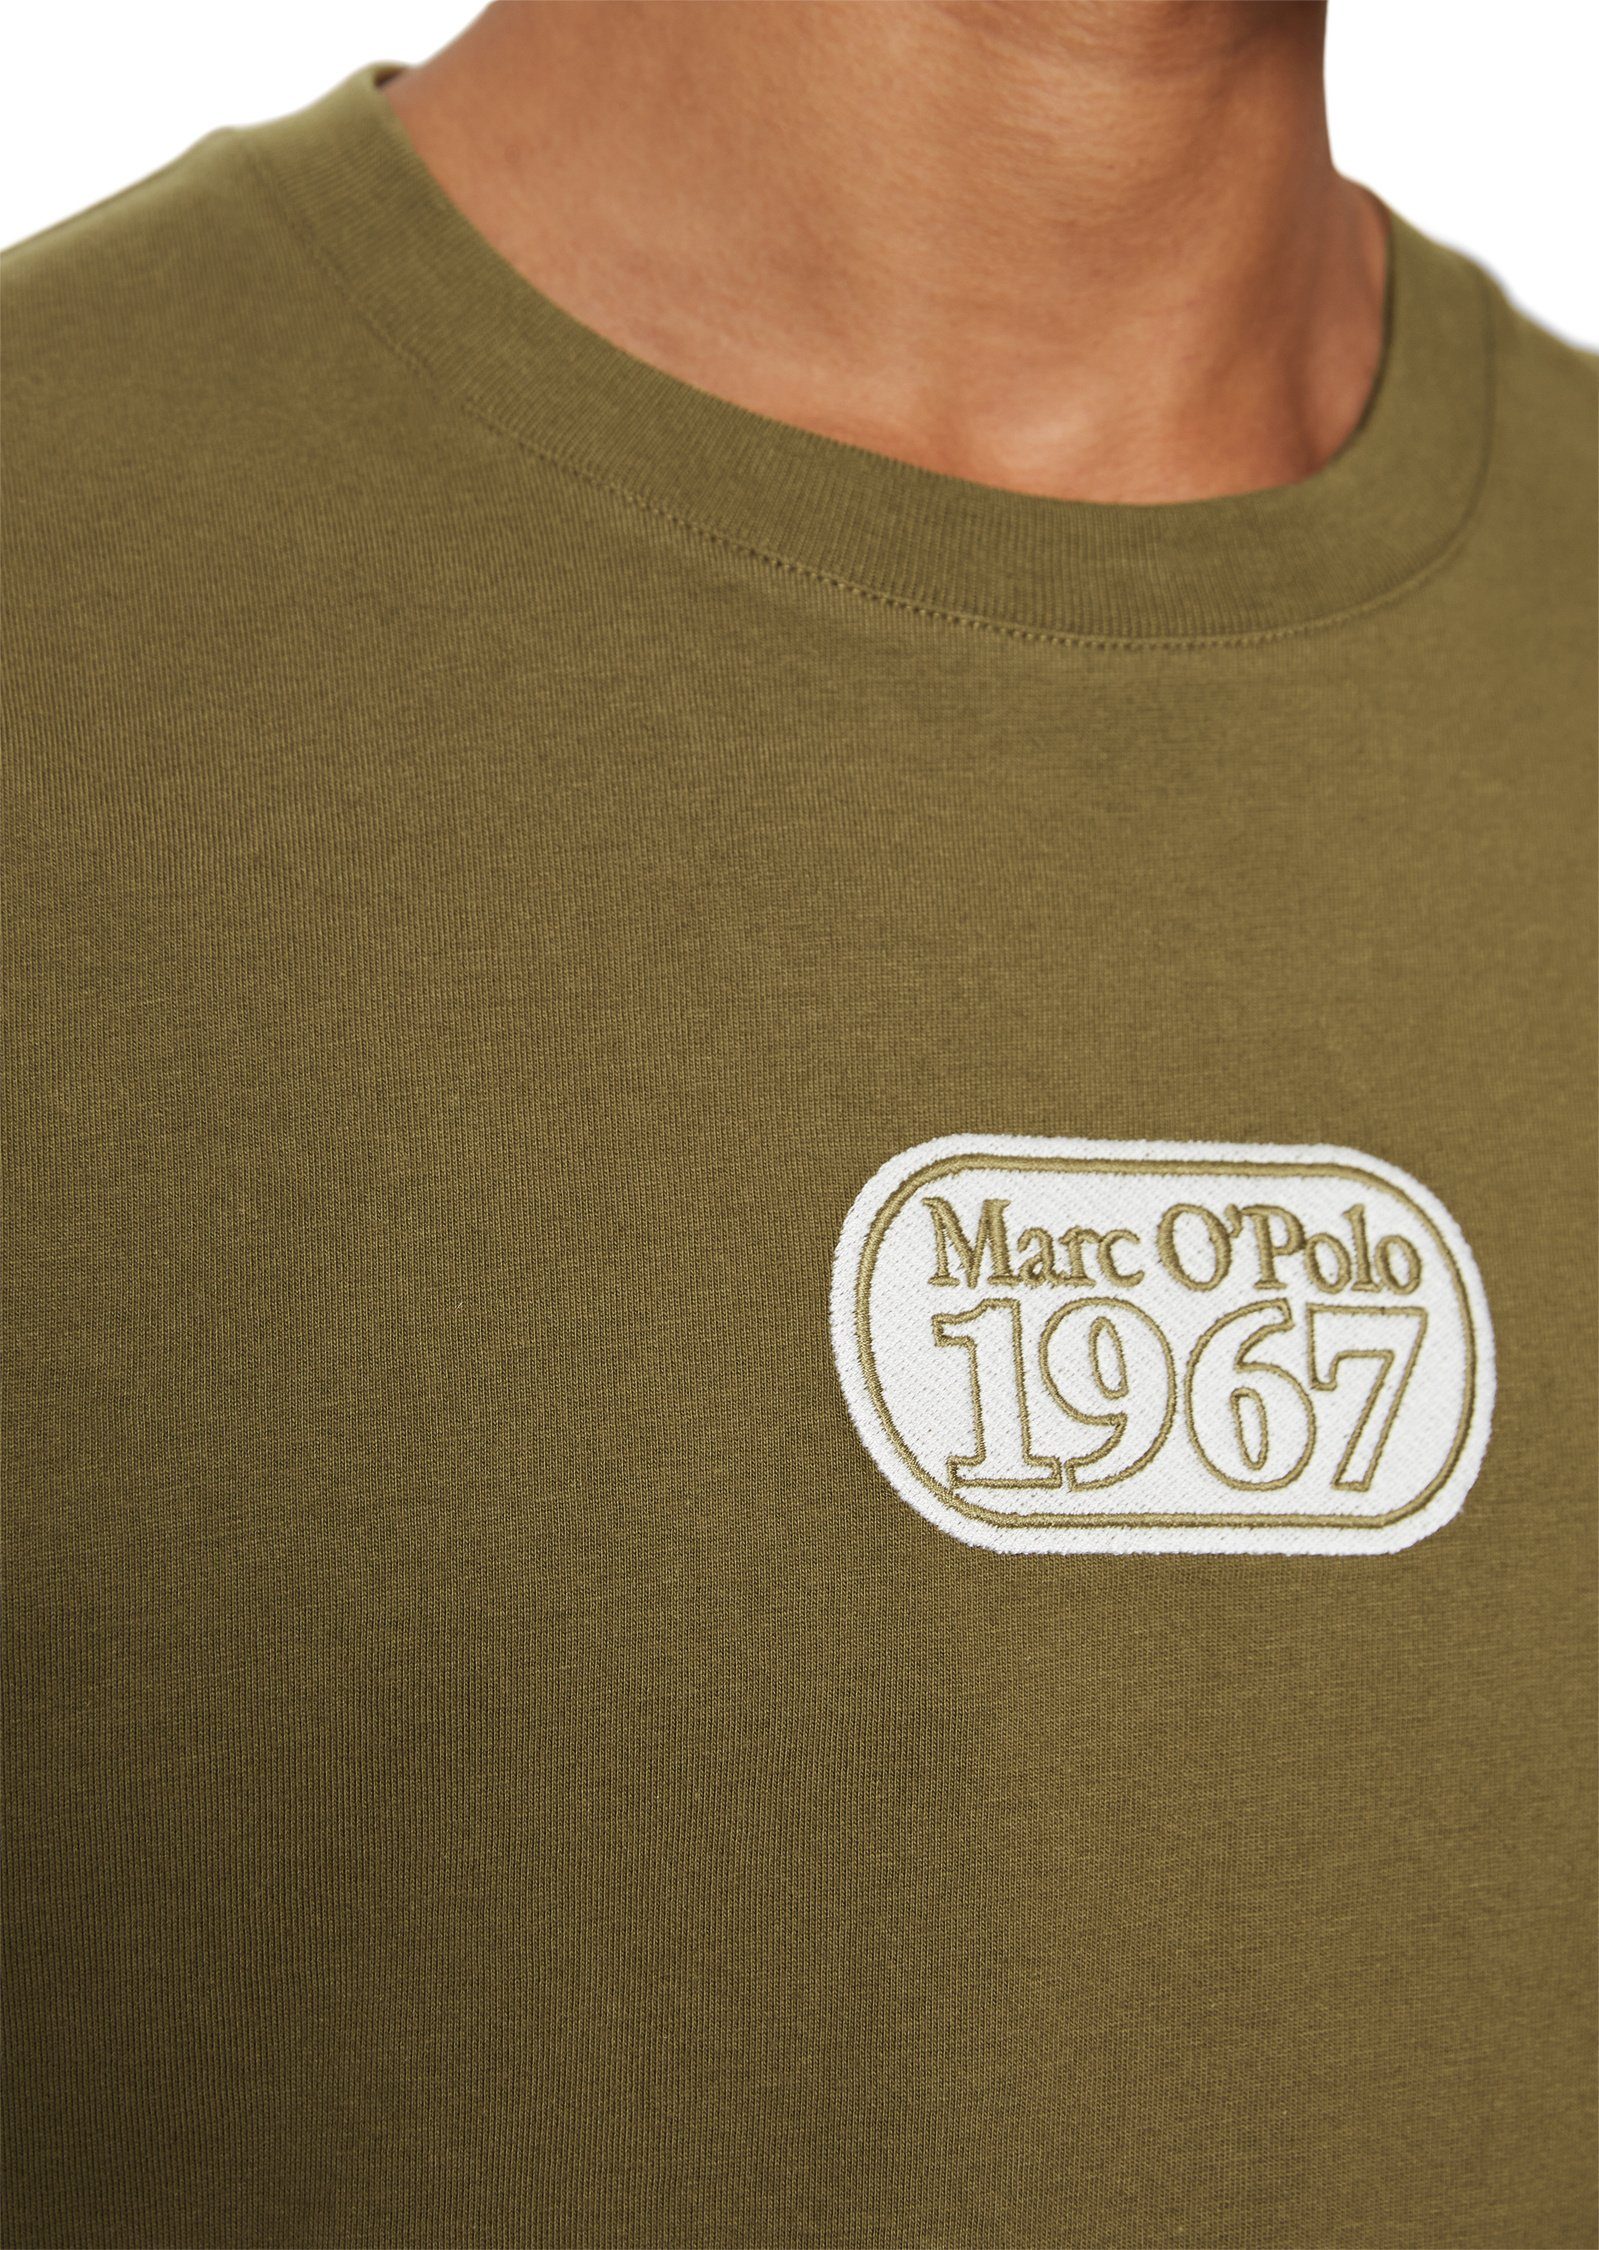 braun mittelschwerem Bio-Baumwoll-Jersey aus O'Polo Marc T-Shirt